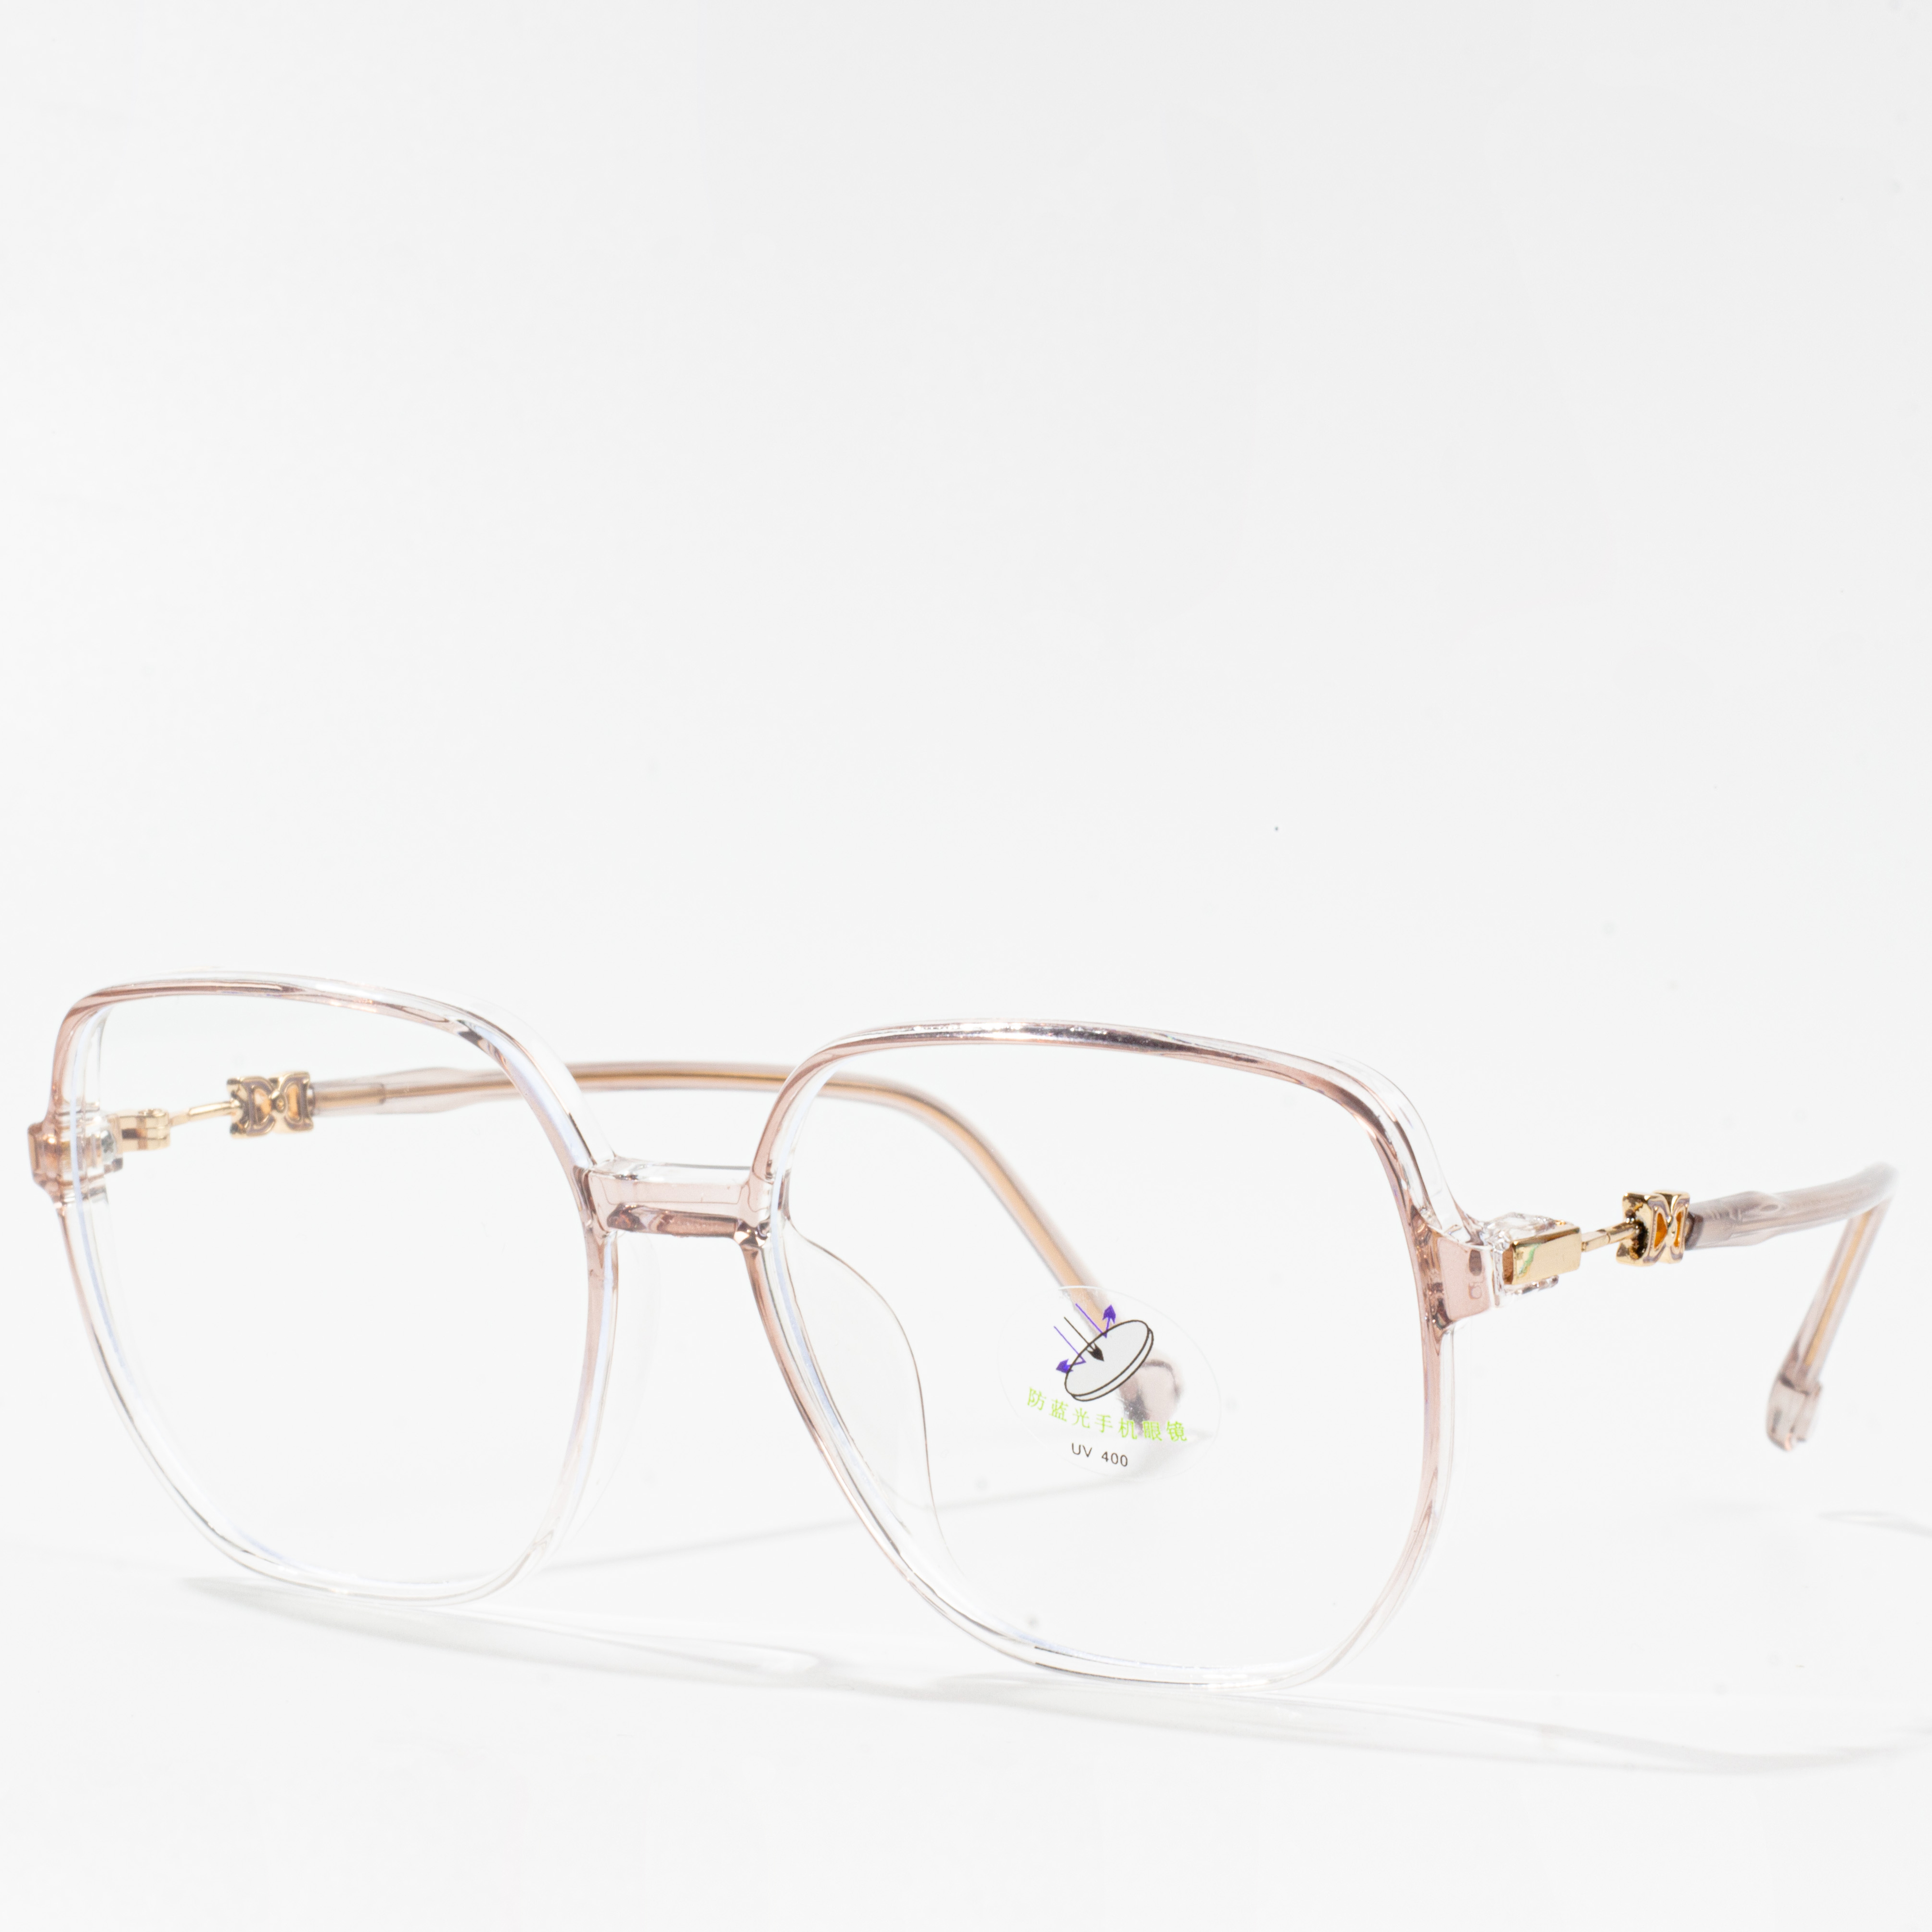 frame kacamata